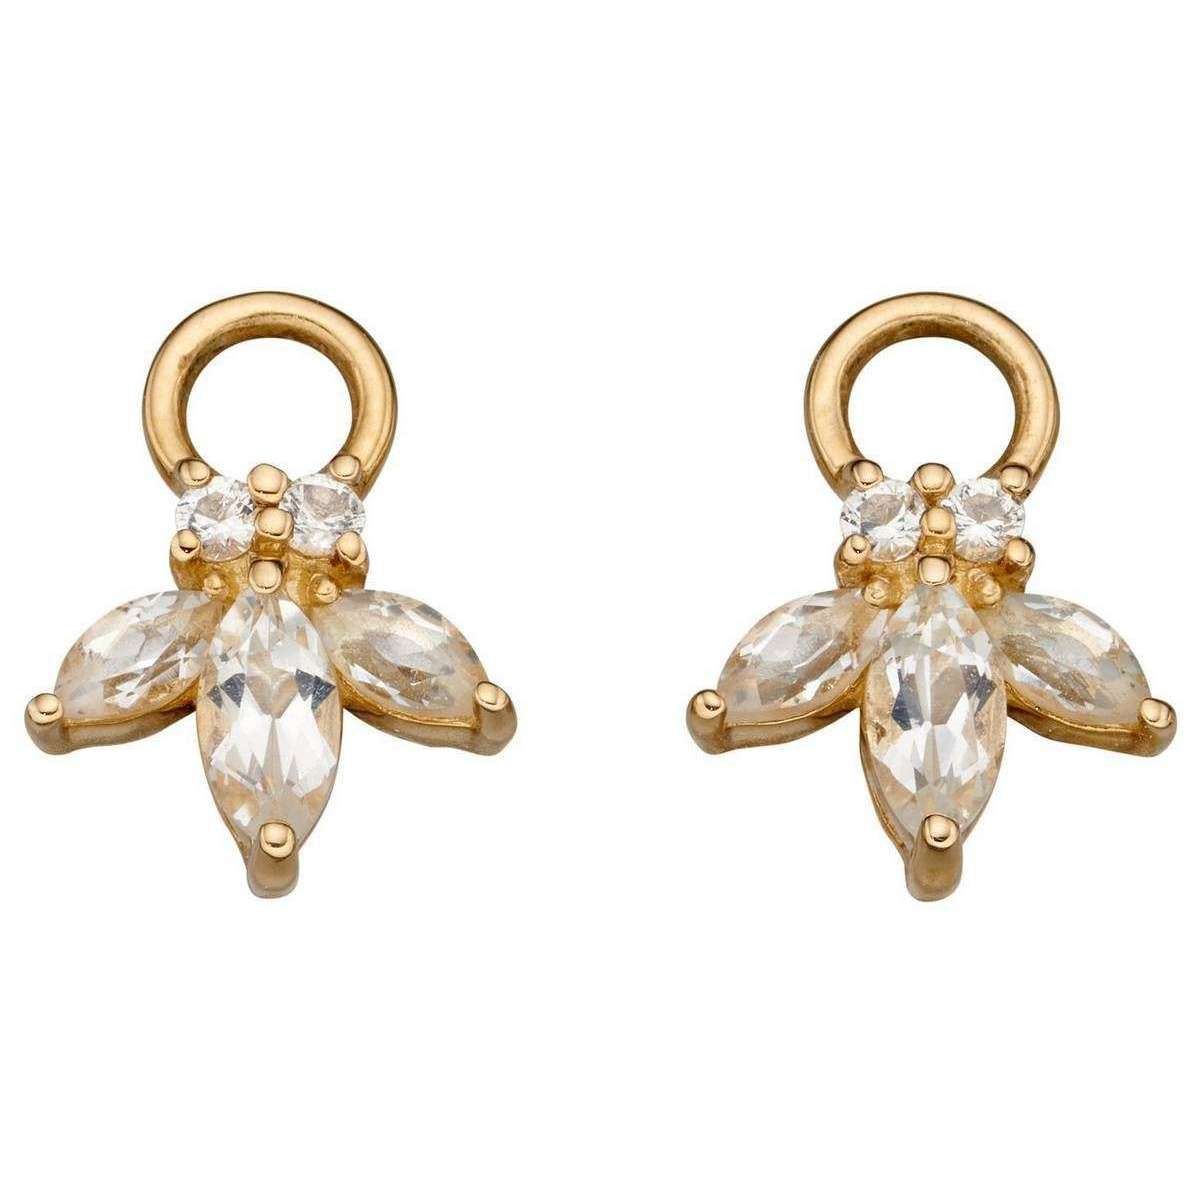 Elements Gold Topaz Flower Navette Earring Charm - Gold/Clear